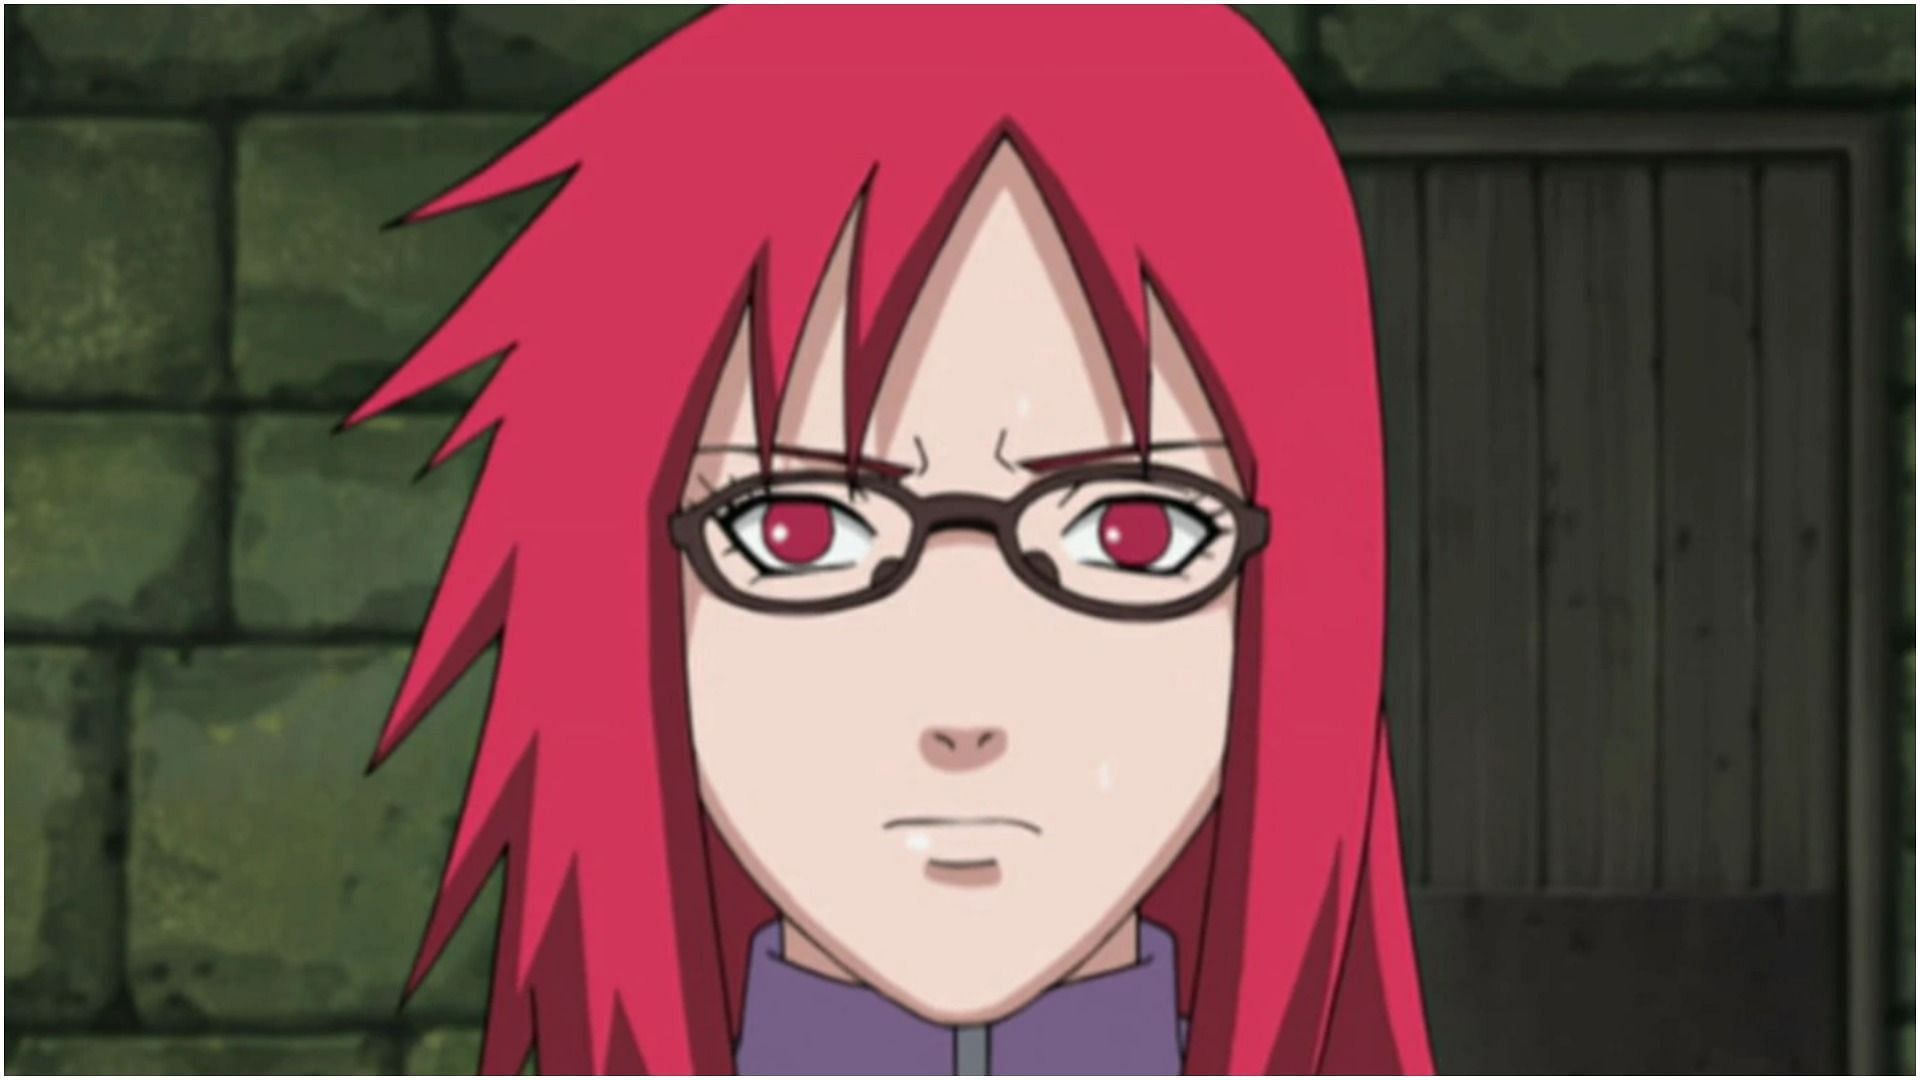 Karin as seen in Naruto (Image via Studio Pierrot)